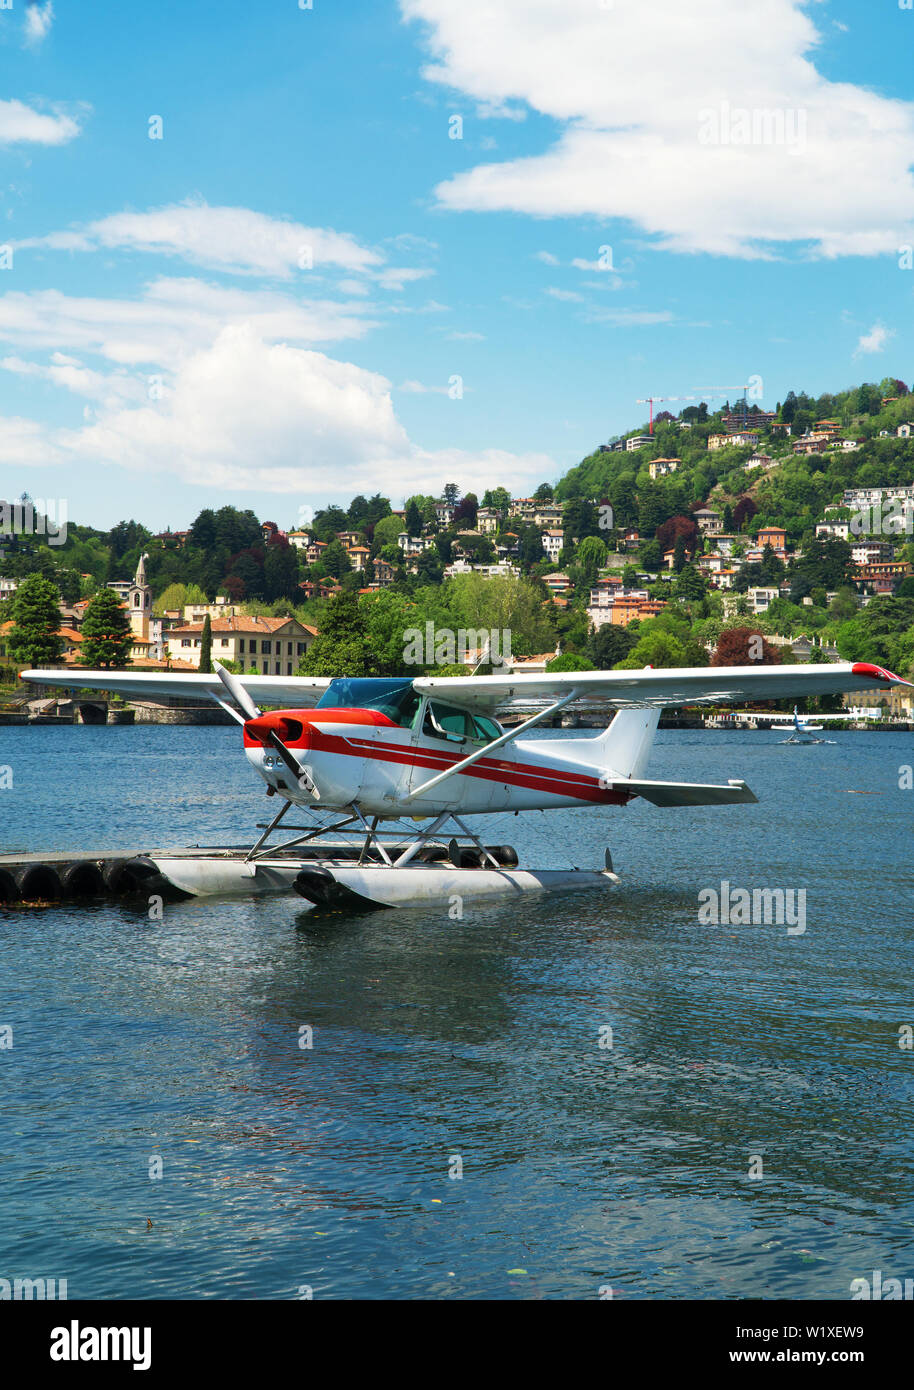 Red floatplane or seaplane moored on Como lake. Stock Photo